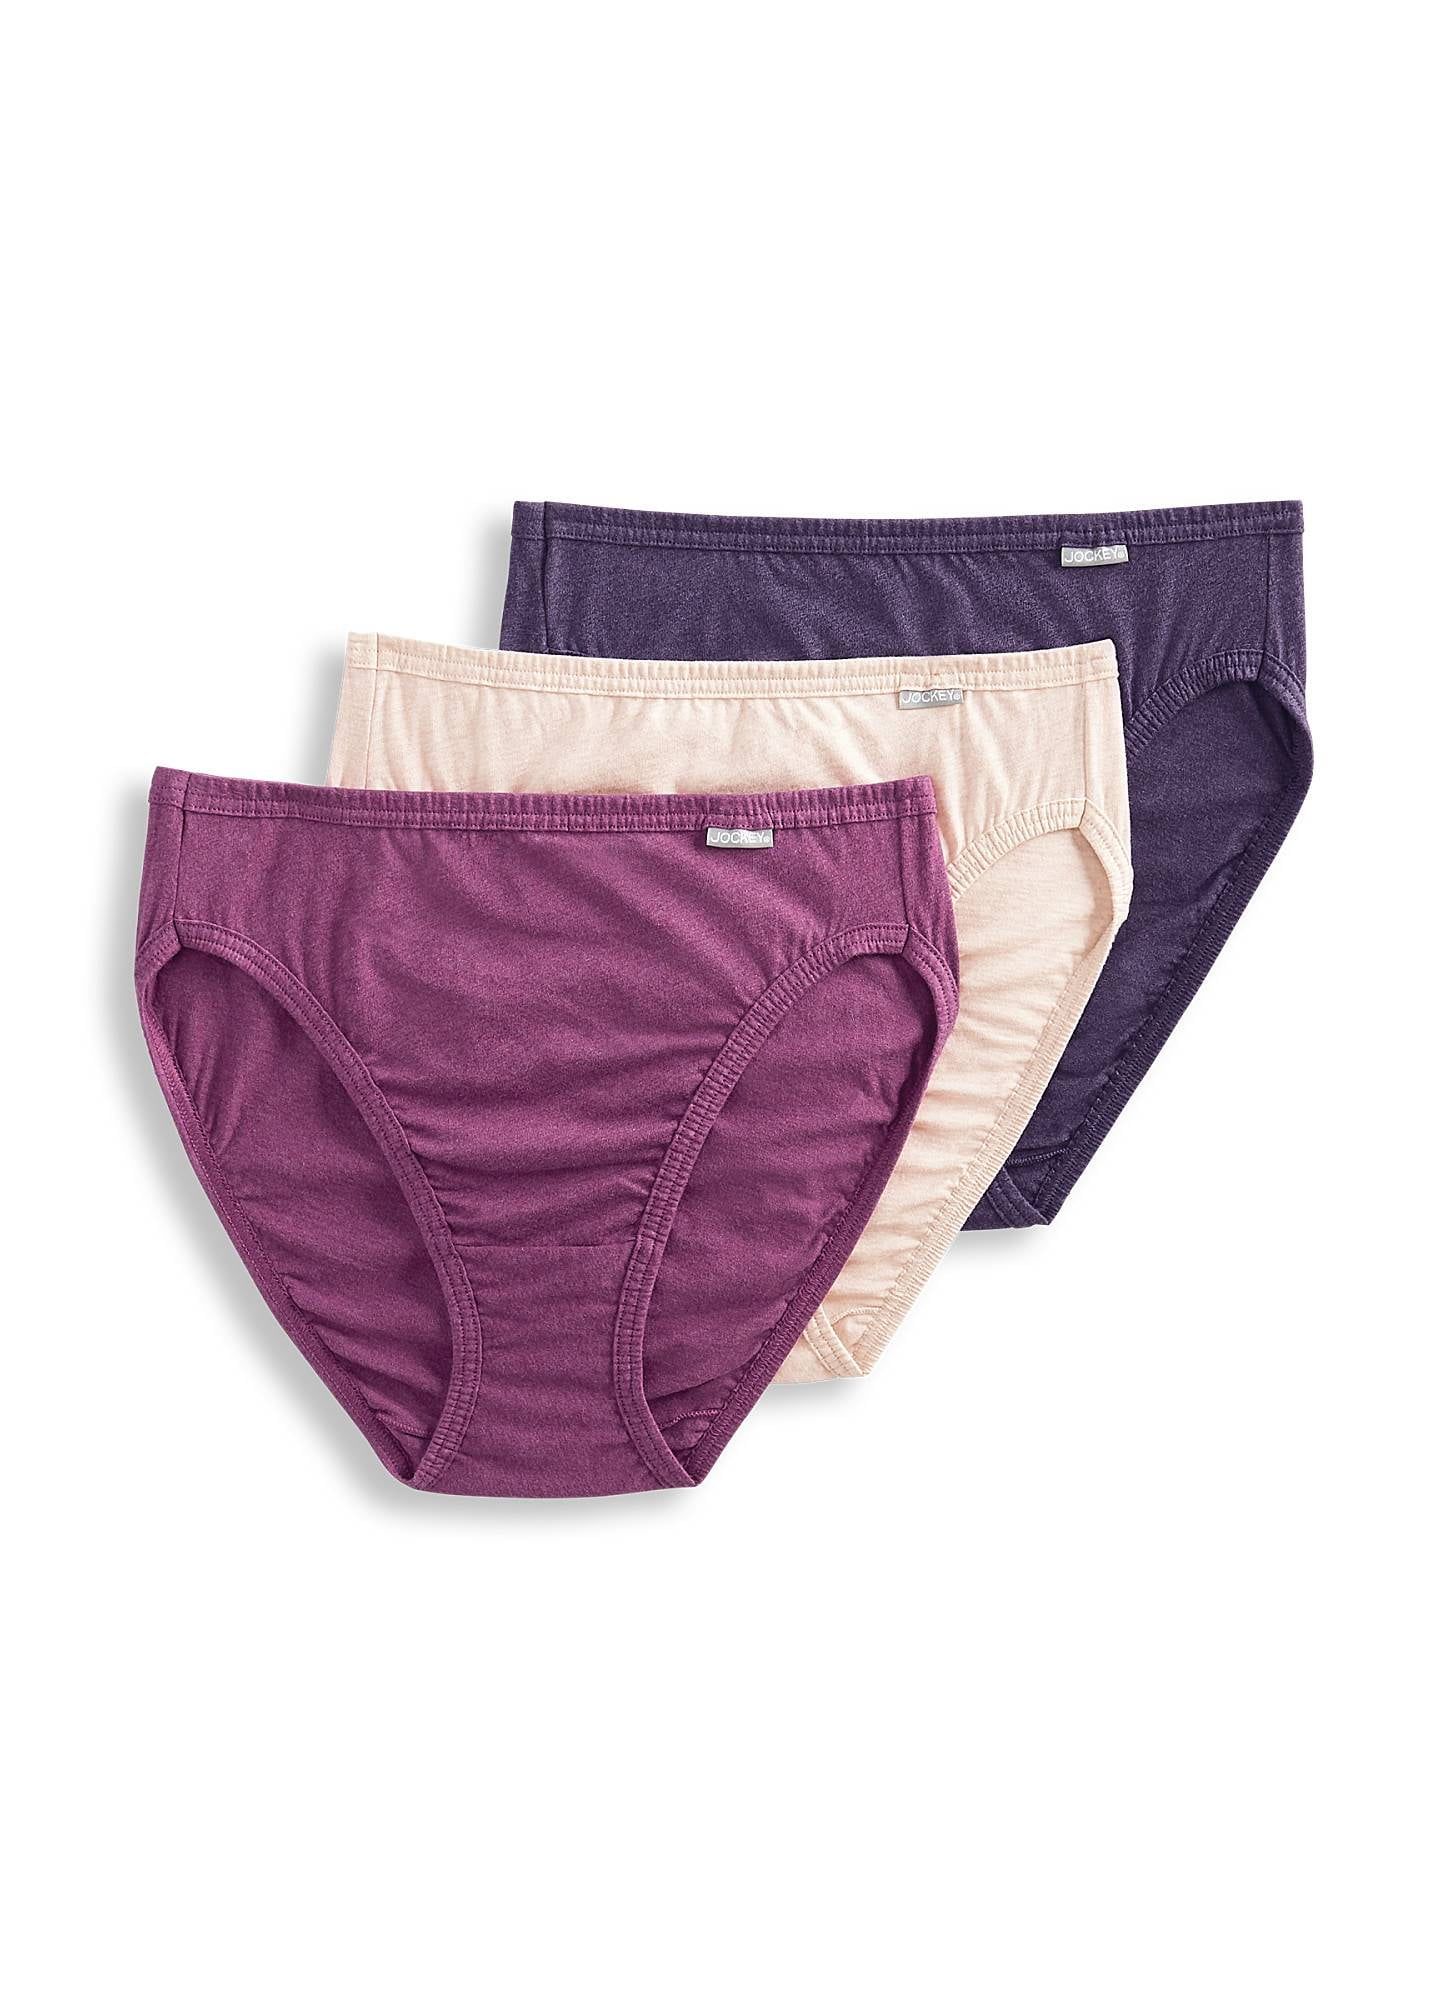 Jockey - Jockey Girls Underwear Bulk Buy-size 10-12 on Designer Wardrobe